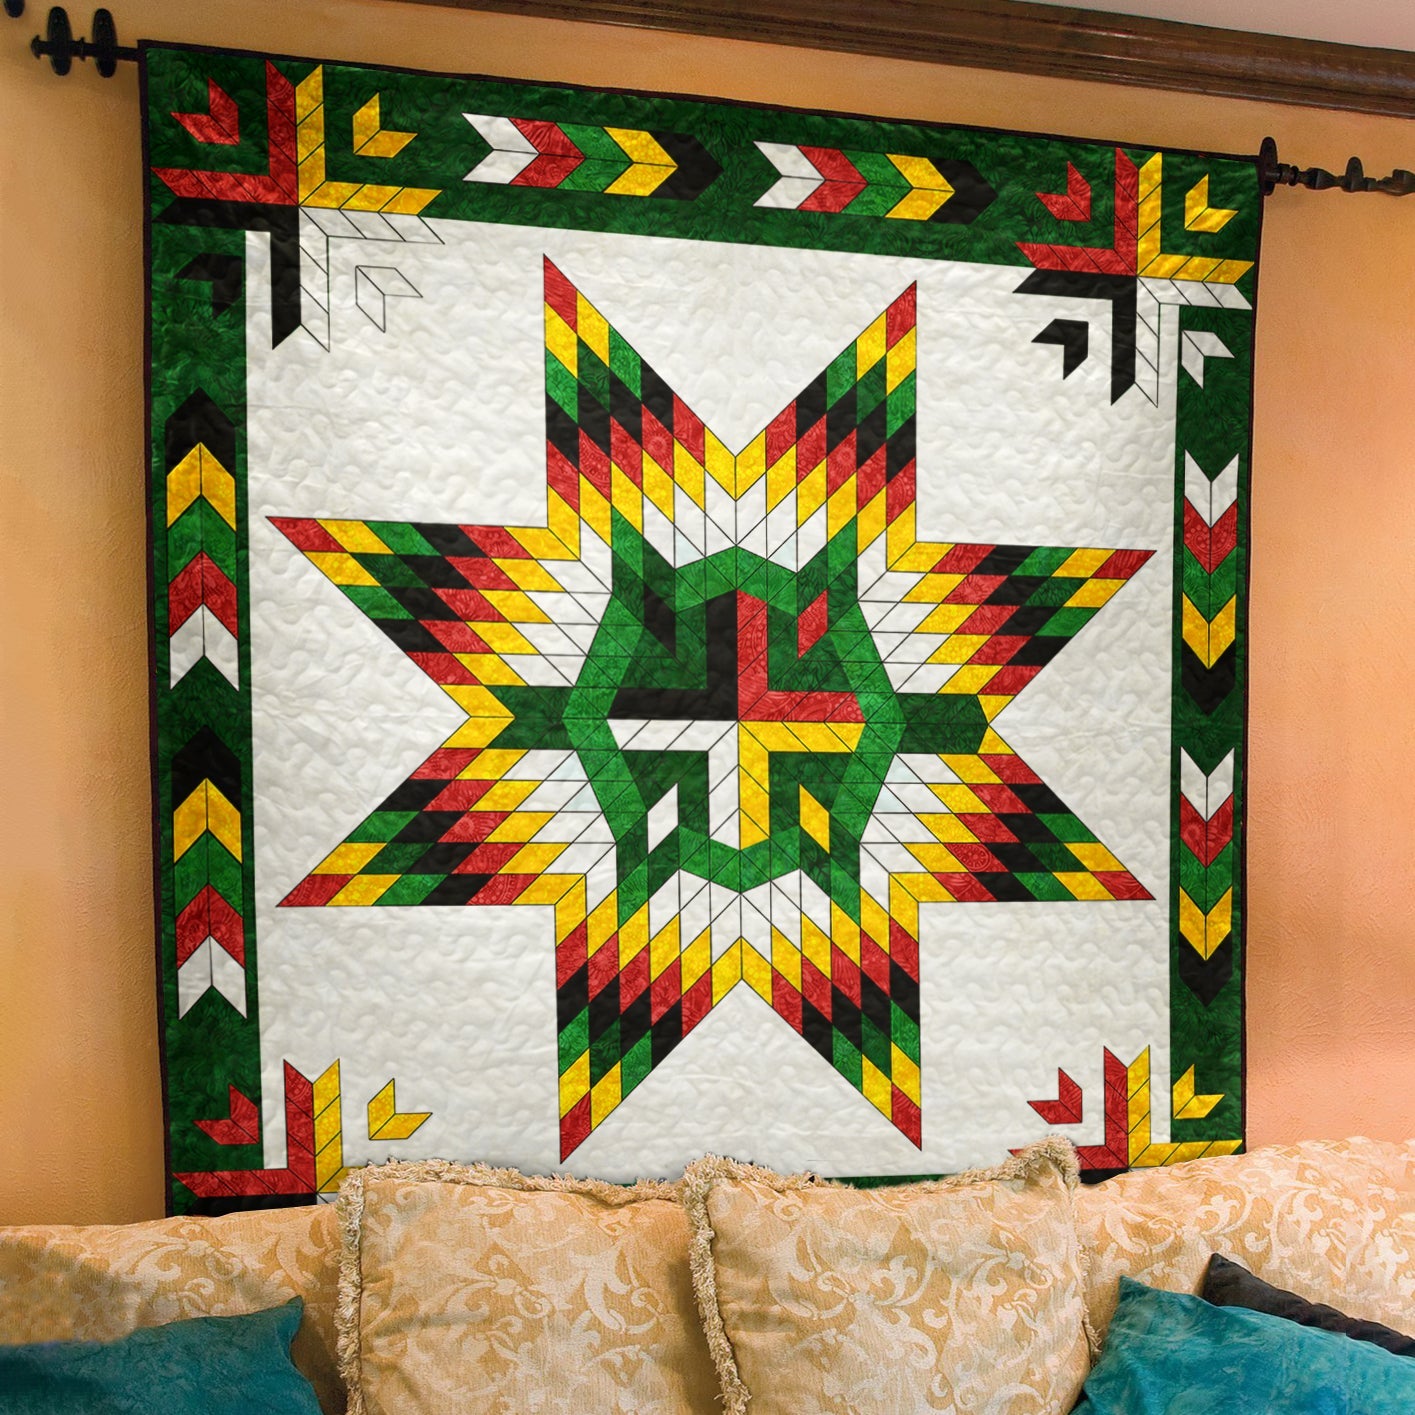 Native American Inspired Star CLA1510382Q Art Quilt